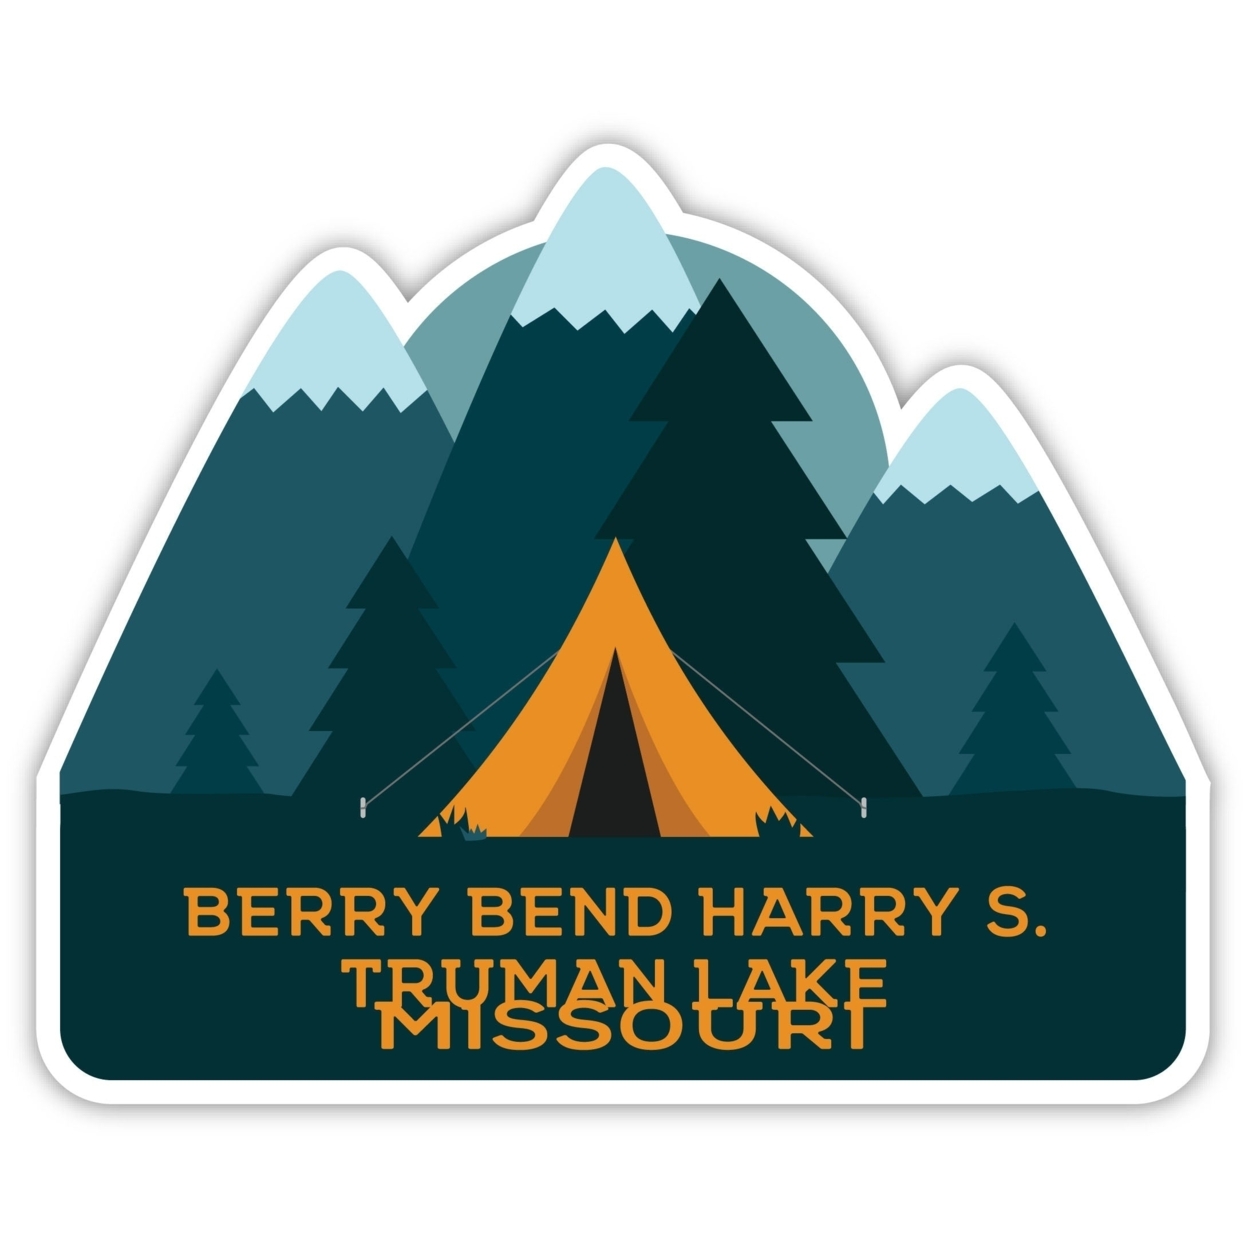 Berry Bend Harry S. Truman Lake Missouri Souvenir Decorative Stickers (Choose Theme And Size) - Single Unit, 2-Inch, Tent